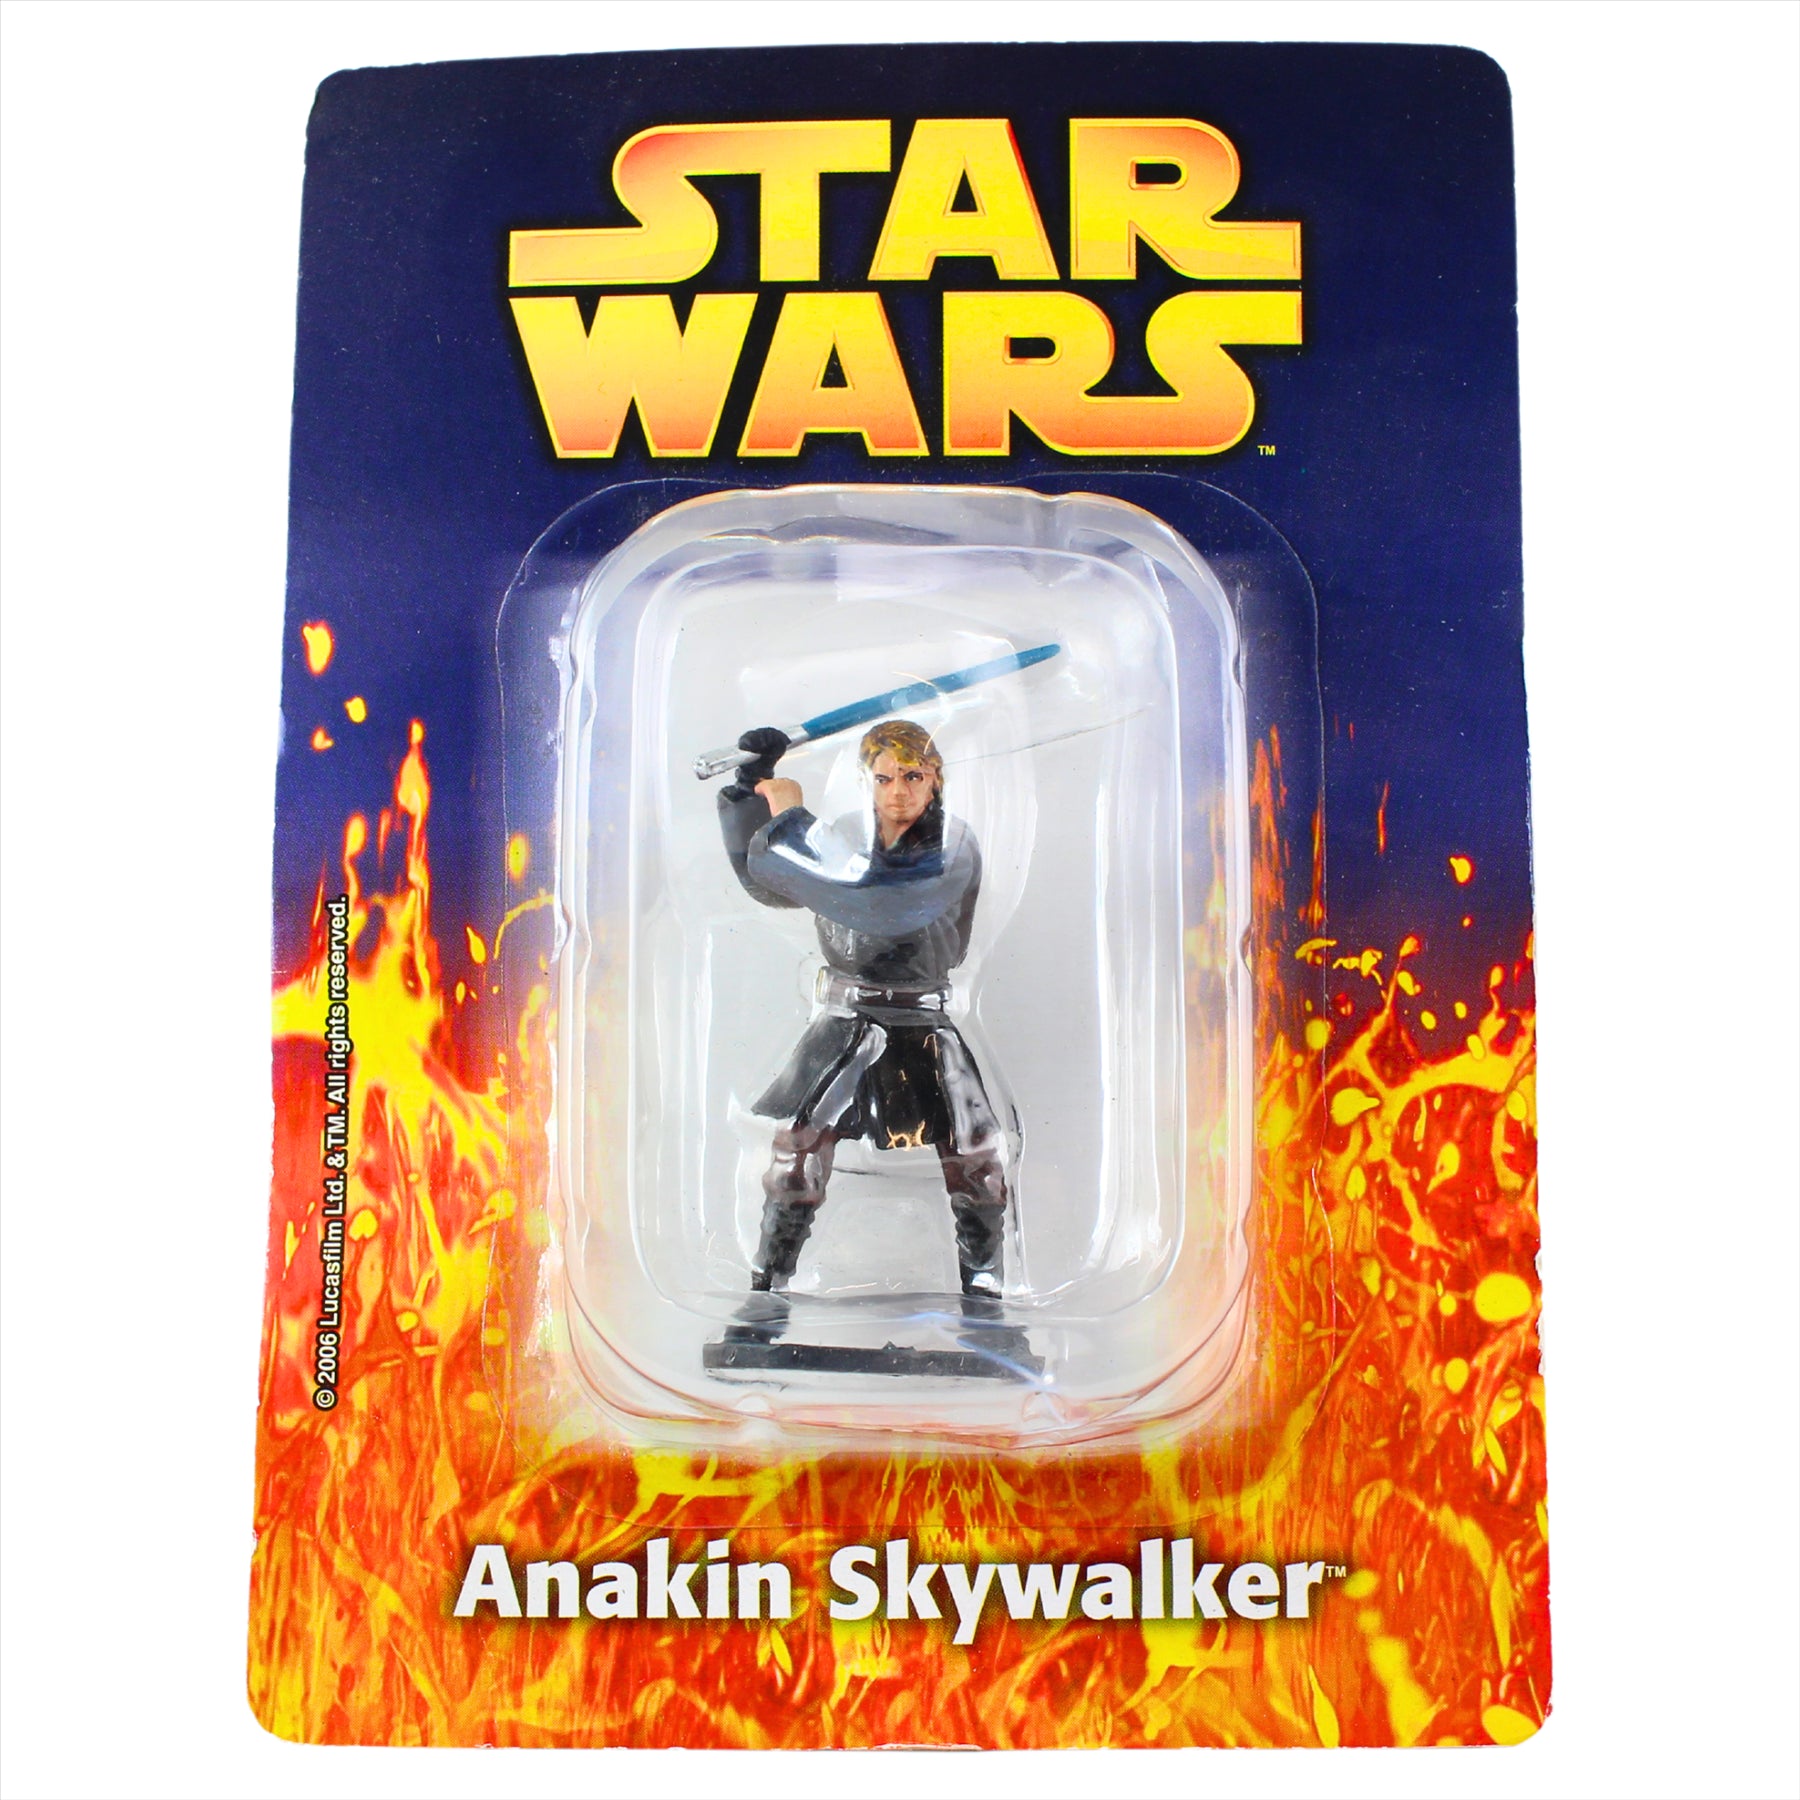 Star Wars Anakin Skywalker, Chewbacca, and TIE Advanced x1 DeAgostini Vintage 6-8cm Diecast Figures - Pack of 3 - Toptoys2u